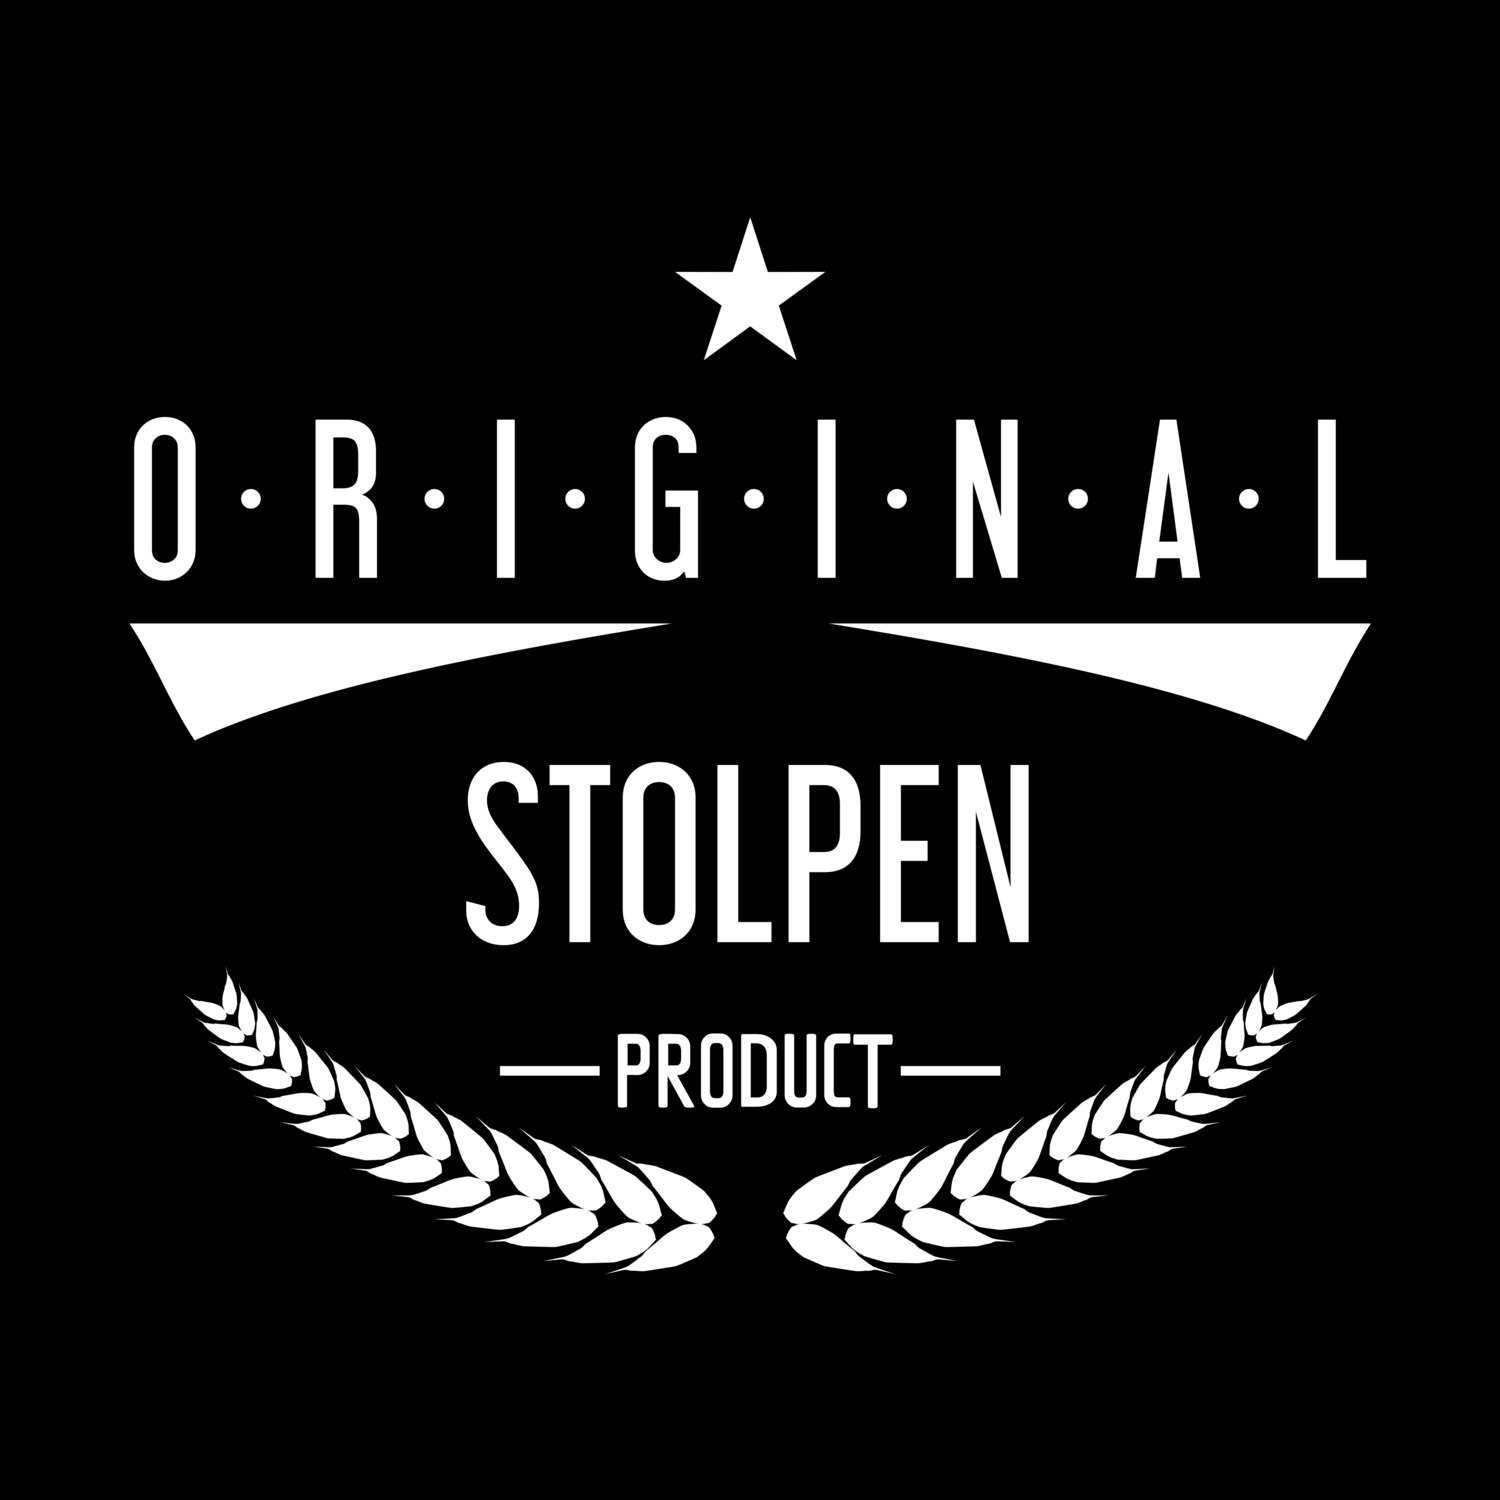 Stolpen T-Shirt »Original Product«